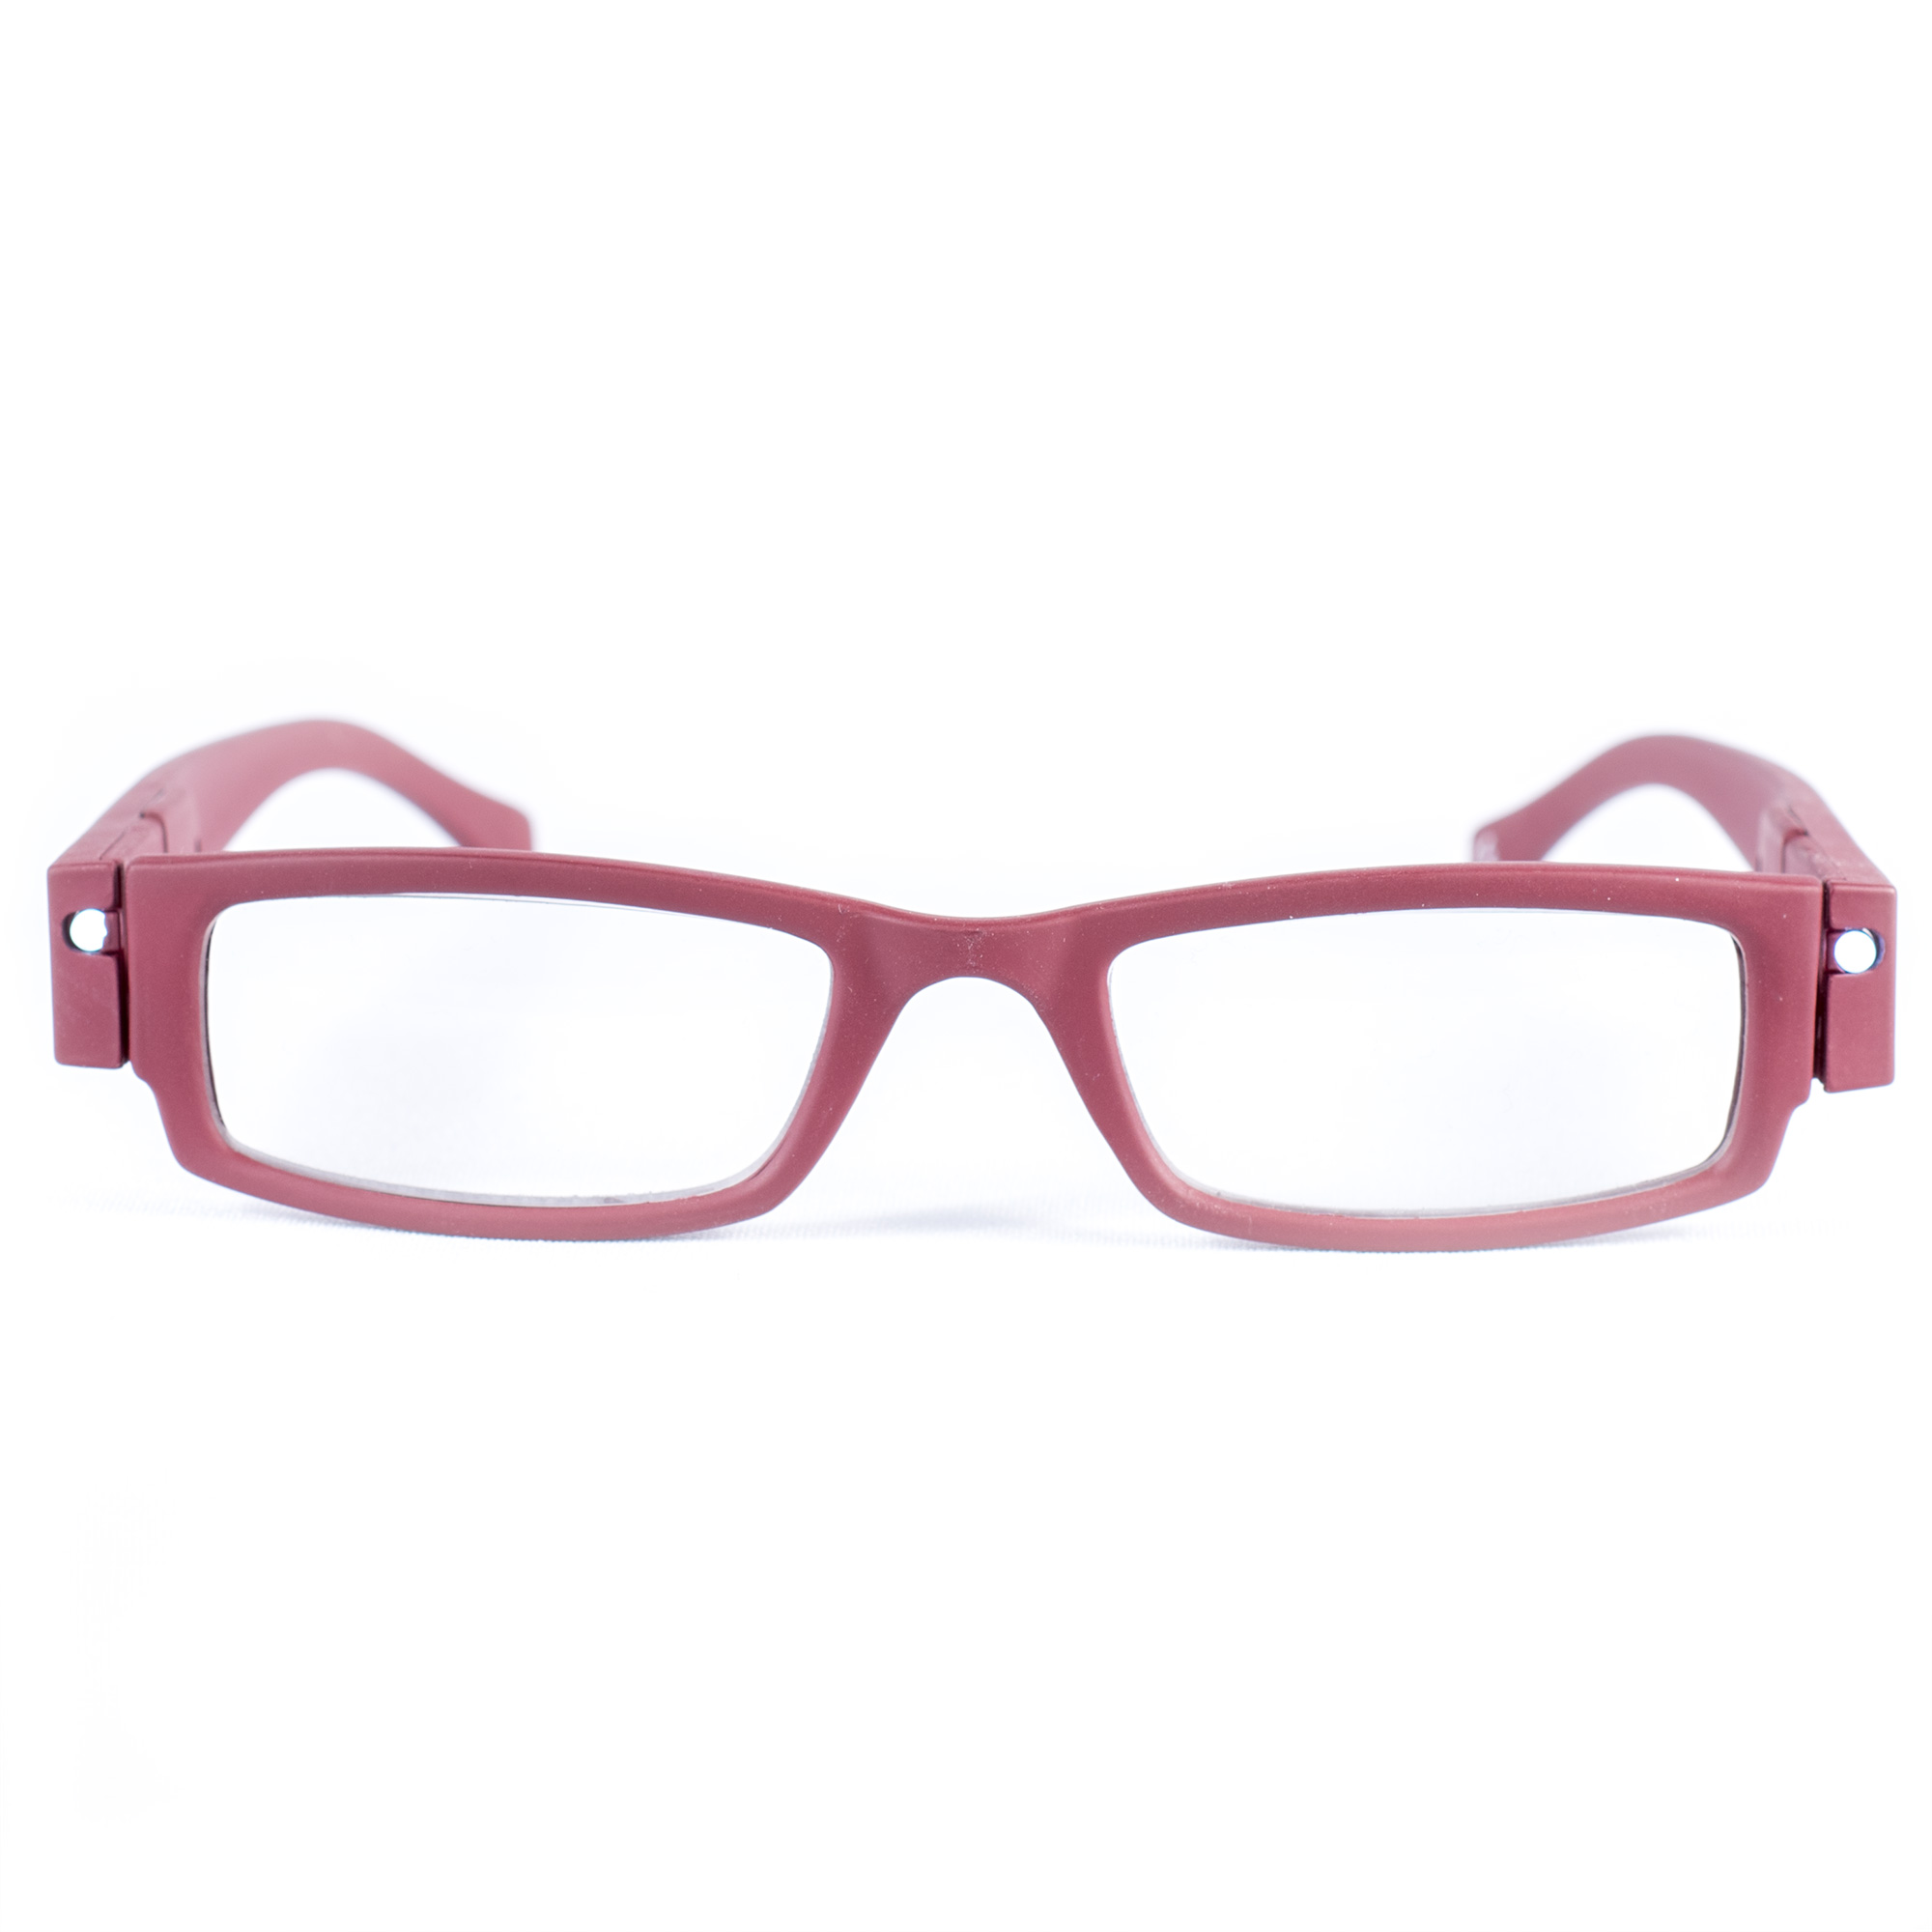 LED leesbril rood. Leesbril met LED-verlichting in mat rood.